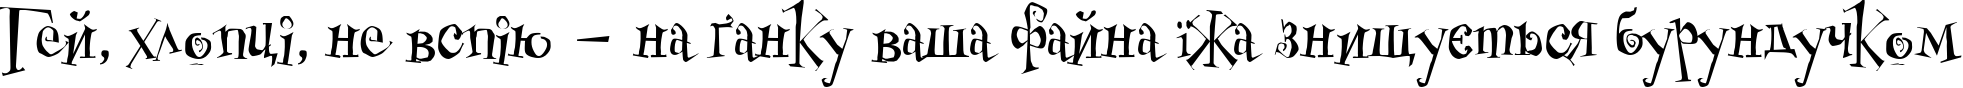 Пример написания шрифтом Cheshirskiy Cat Roman текста на украинском